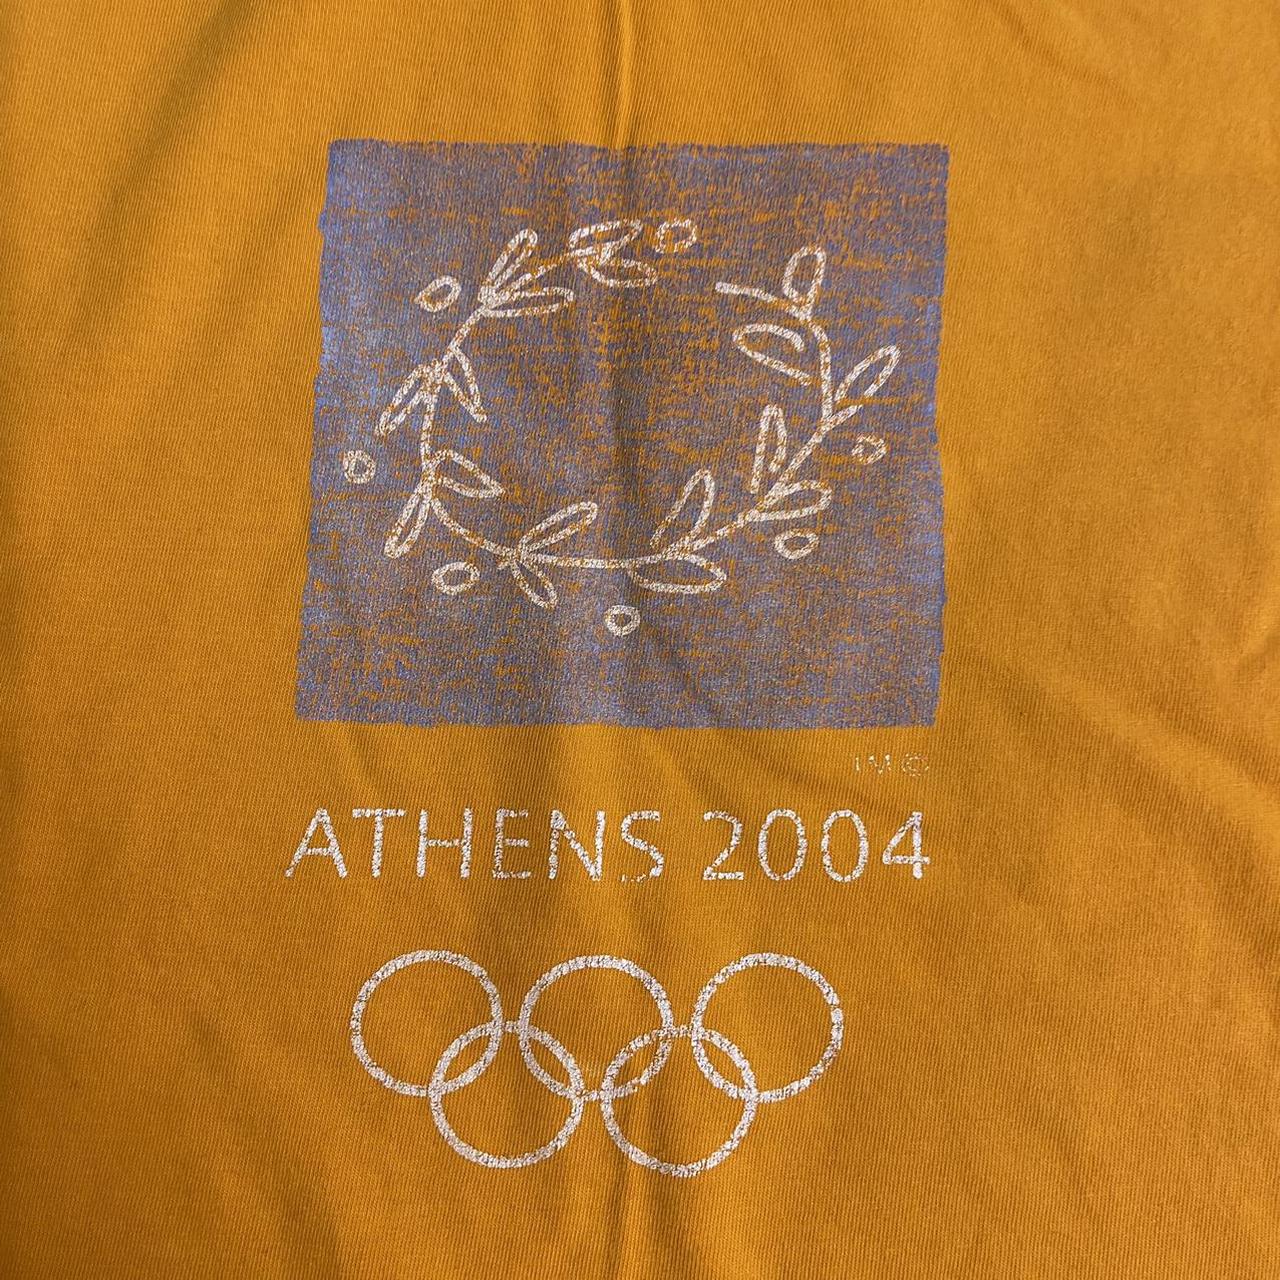 Product Image 3 - Vintage 2004 Greece Olympics tee
faded